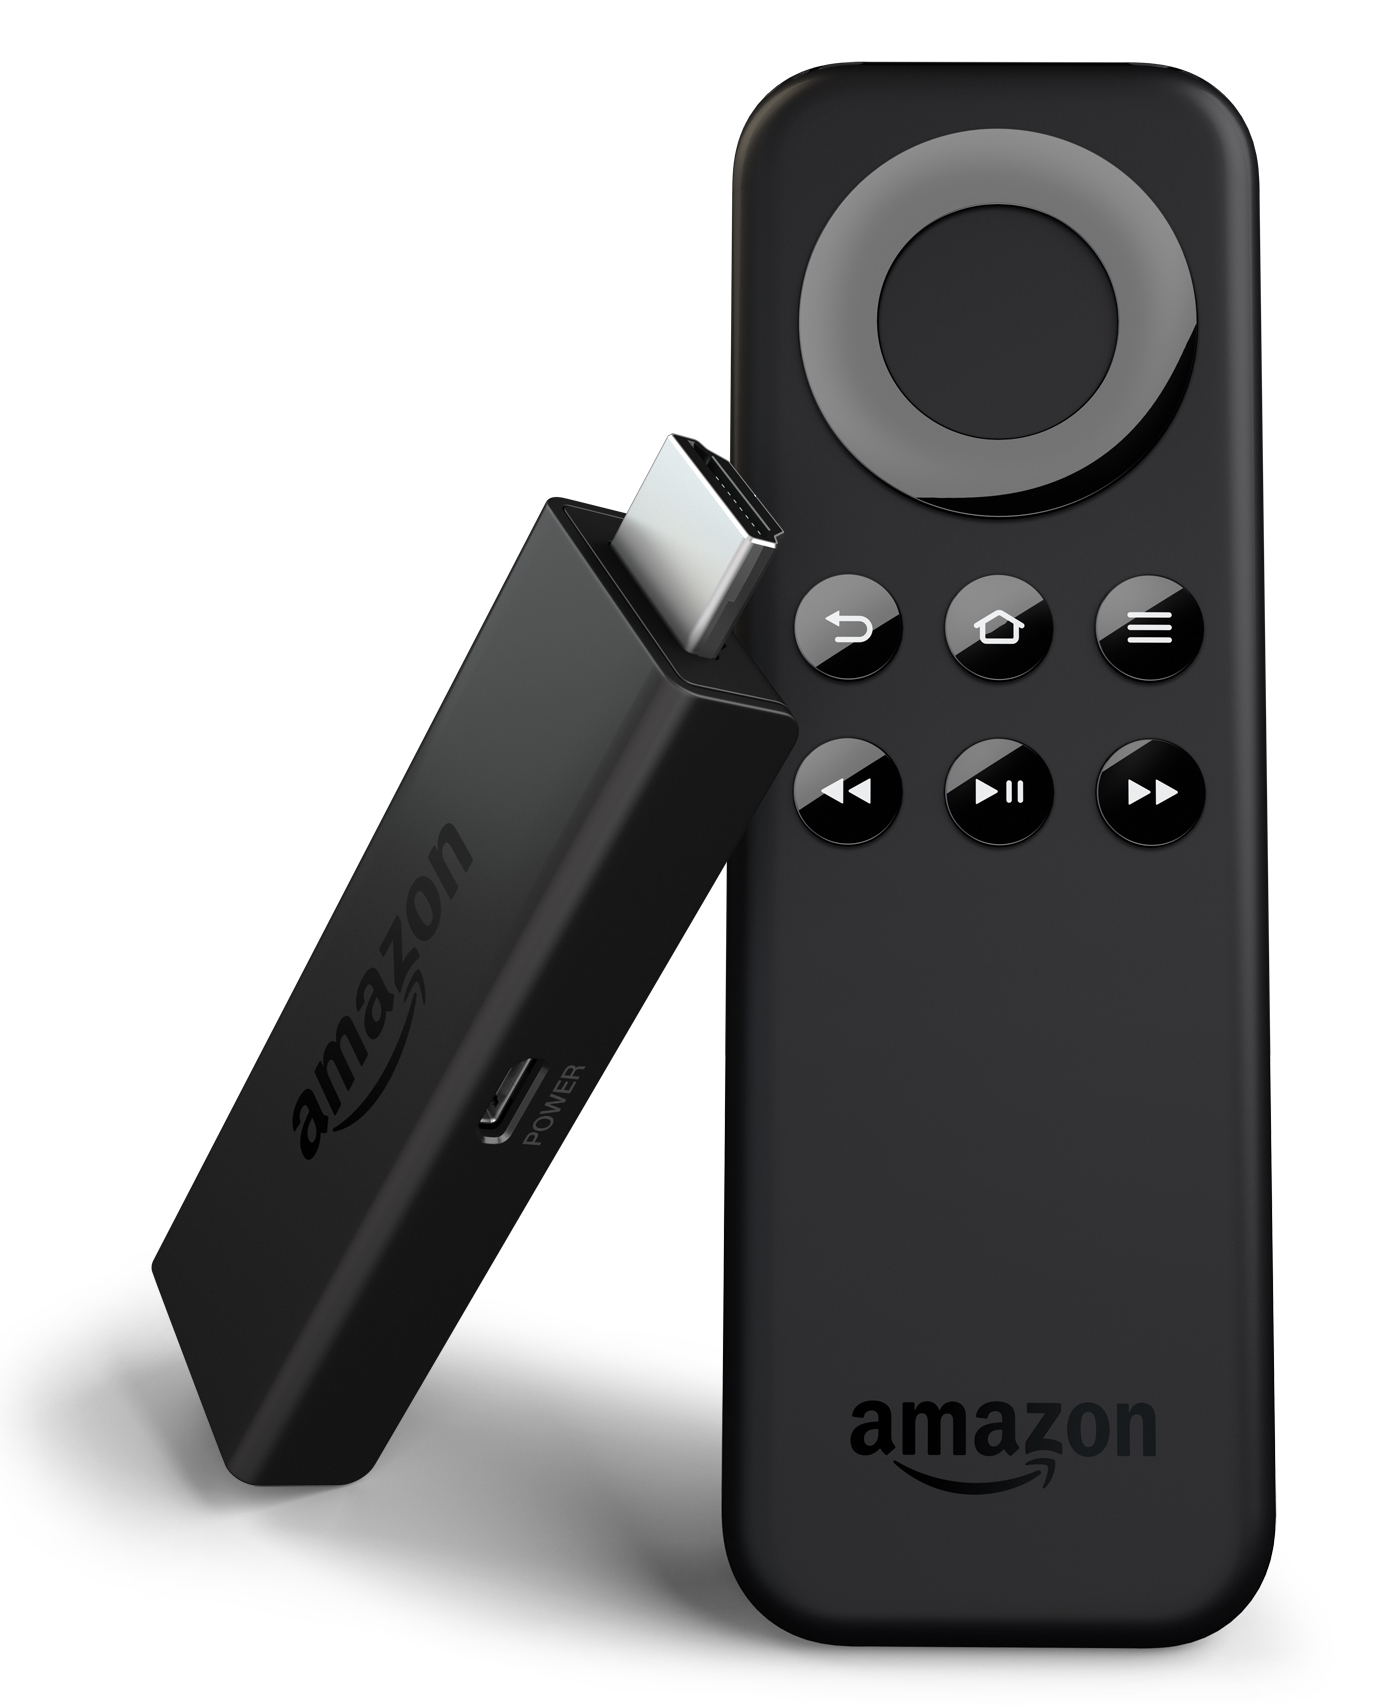 Amazon Fire TV Stick (image 004)